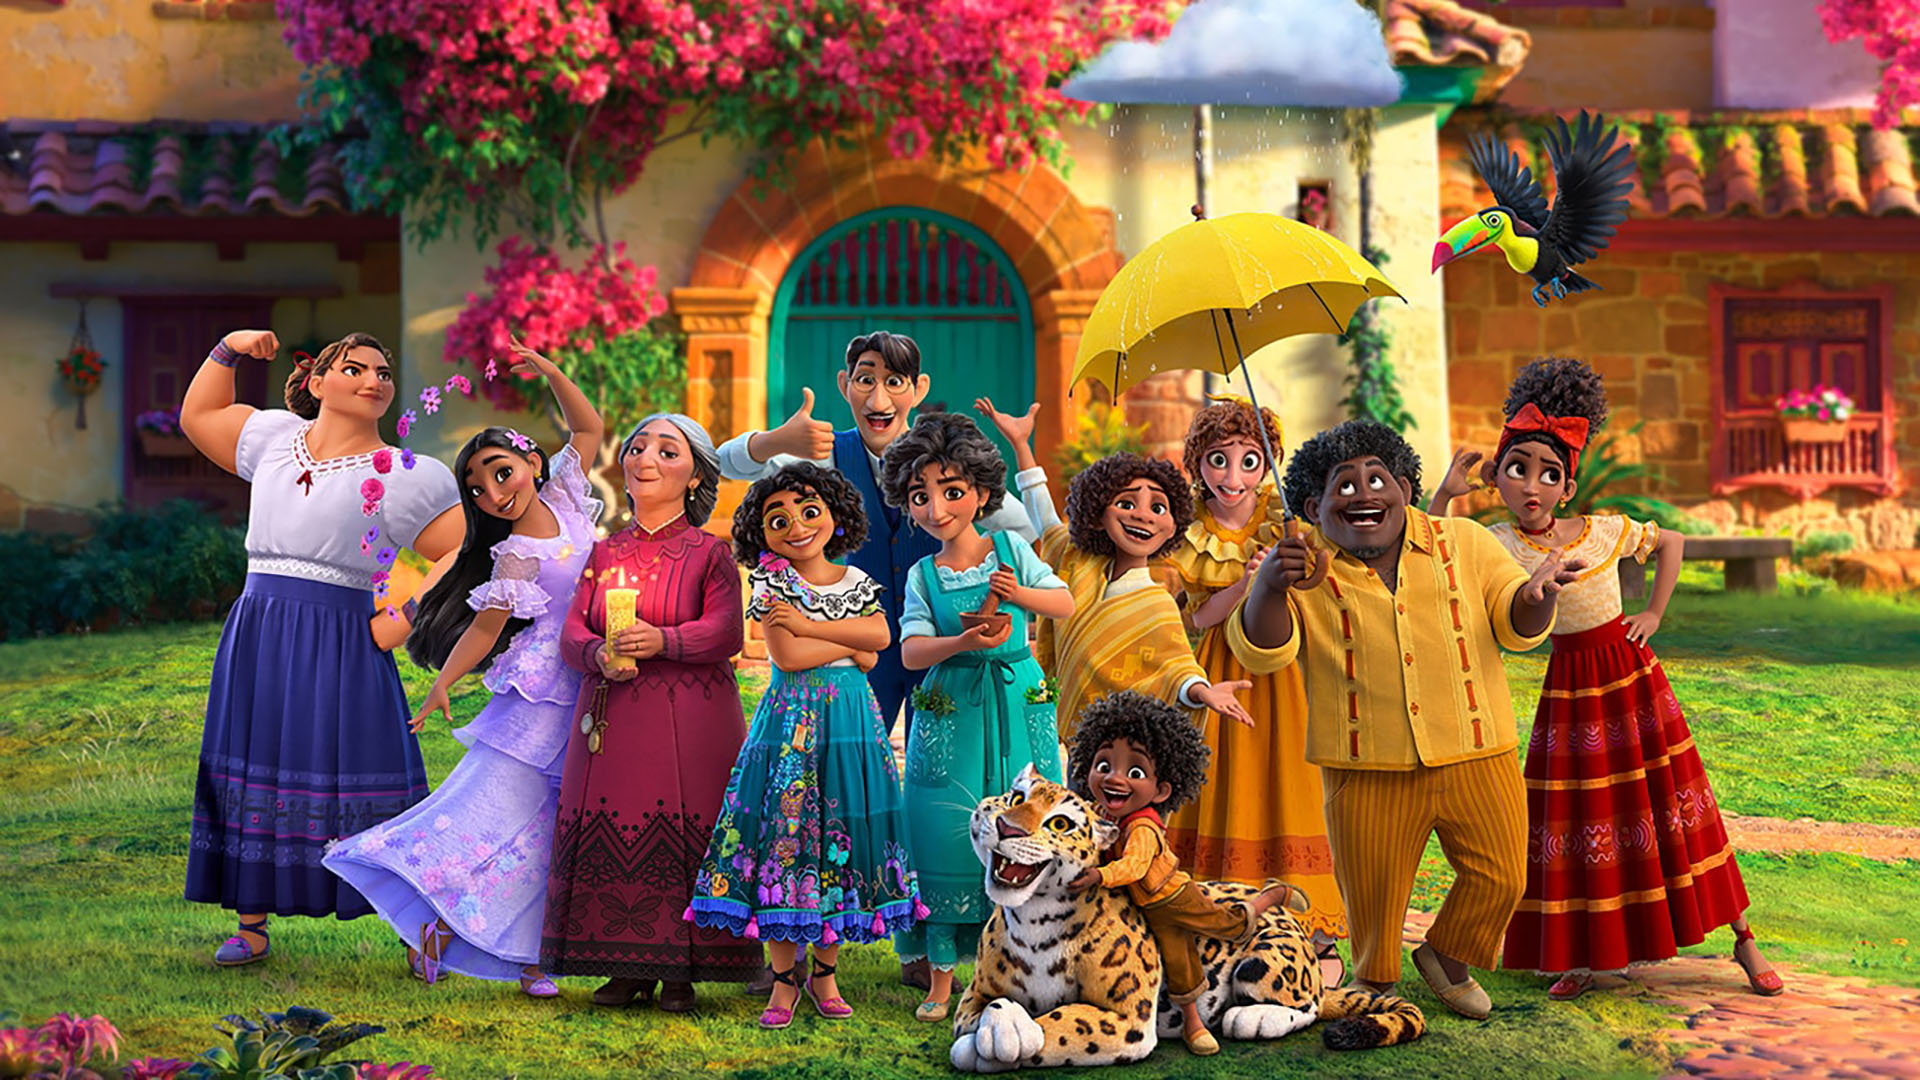 A promotional image for Disney's Encanto movie